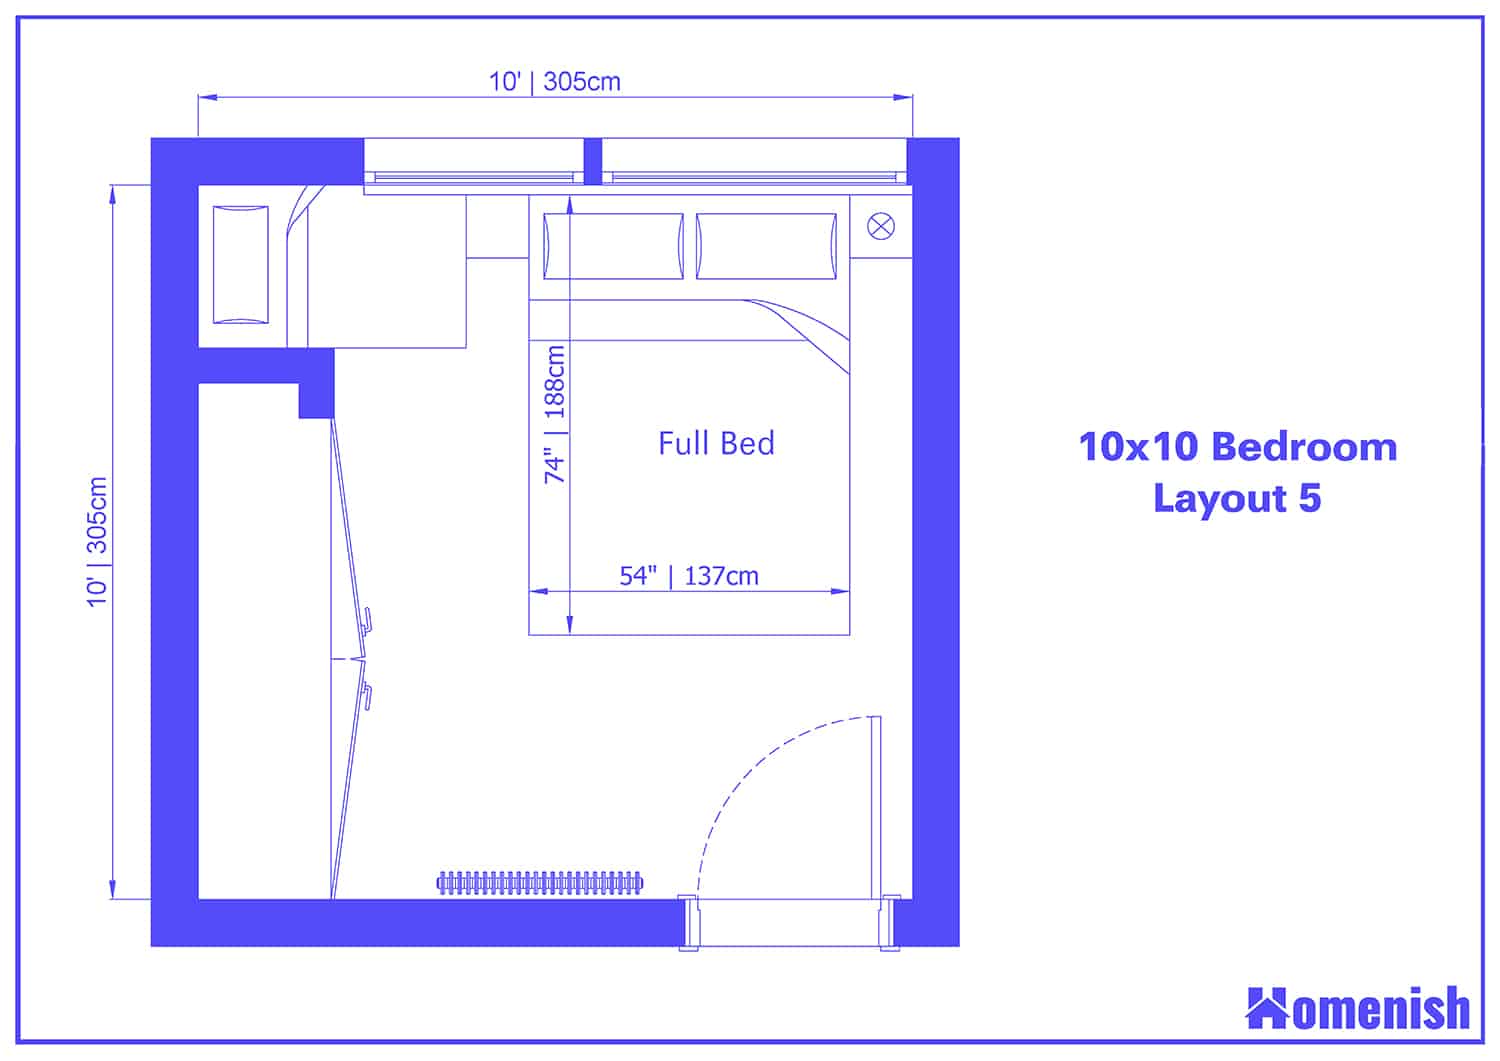 10x10 Bedroom Layout 5